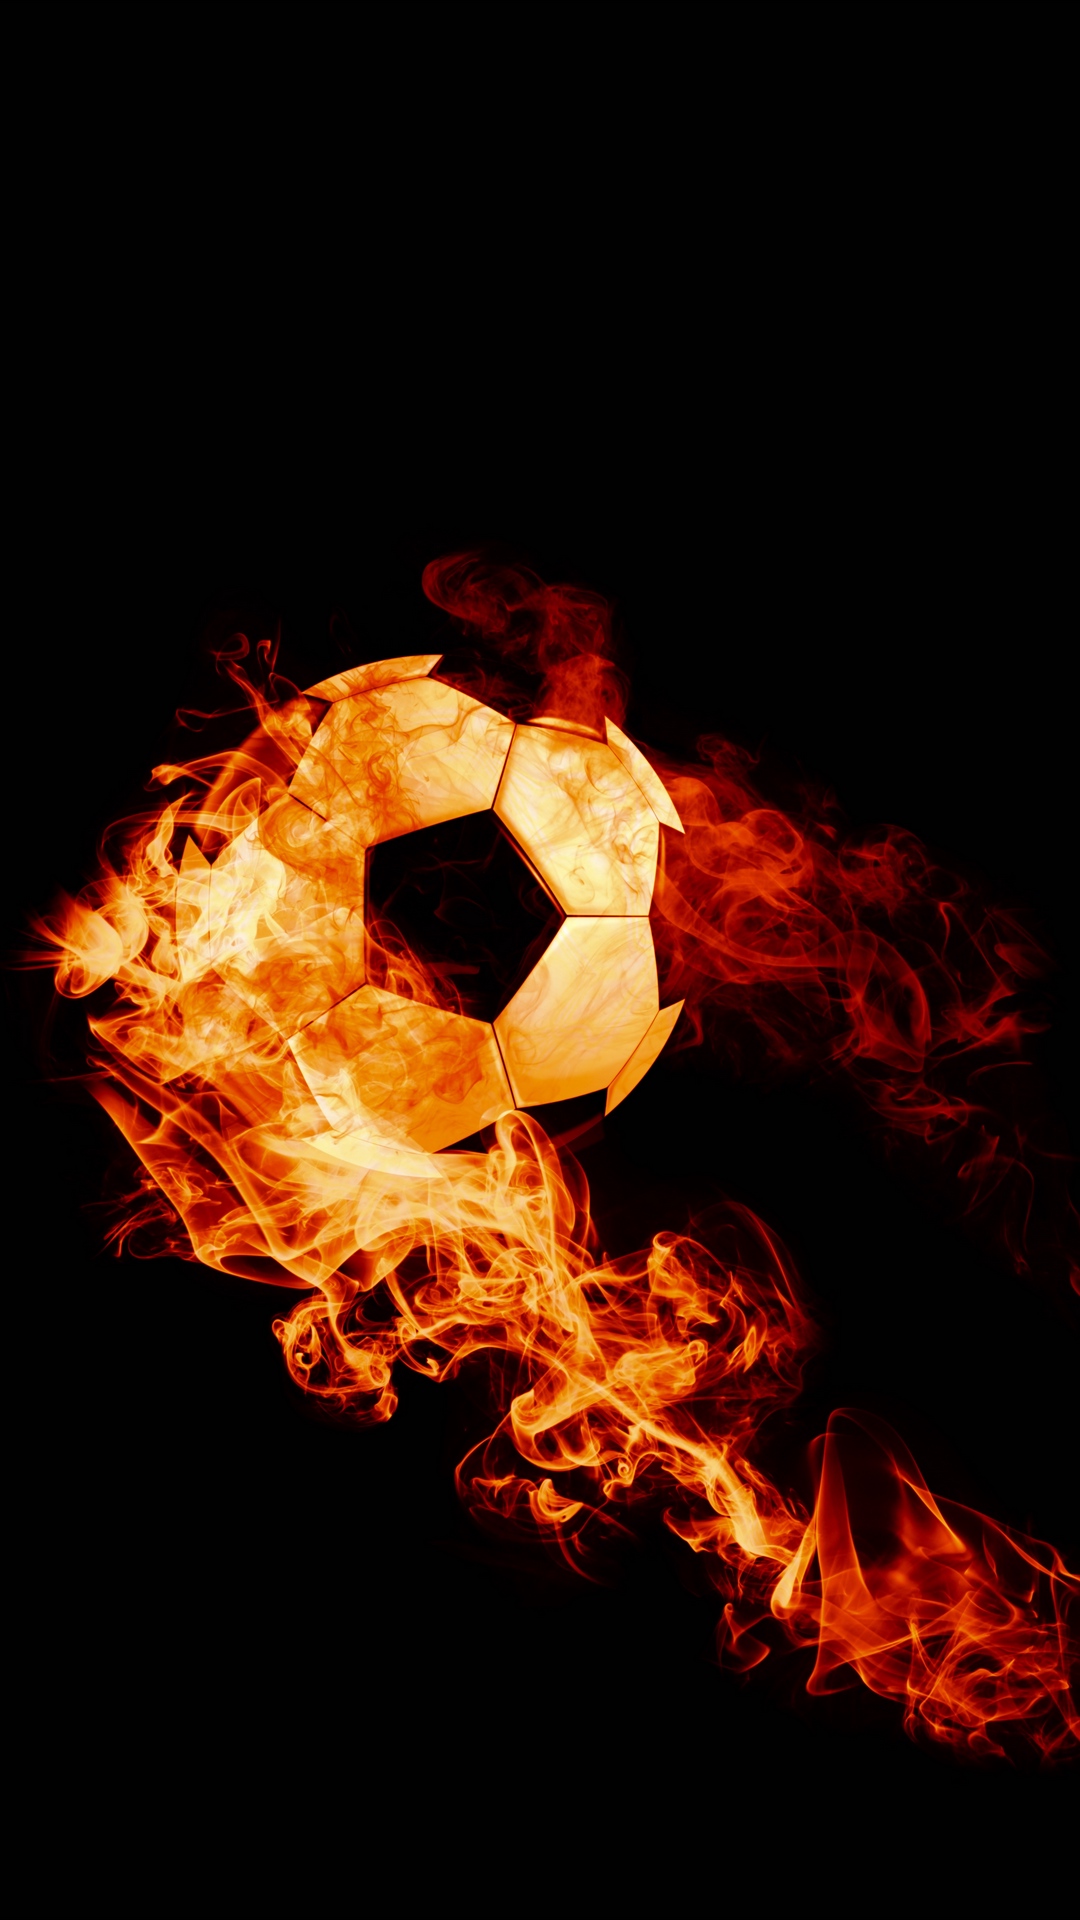 feu papier peint,flamme,feu,football,orange,chaleur